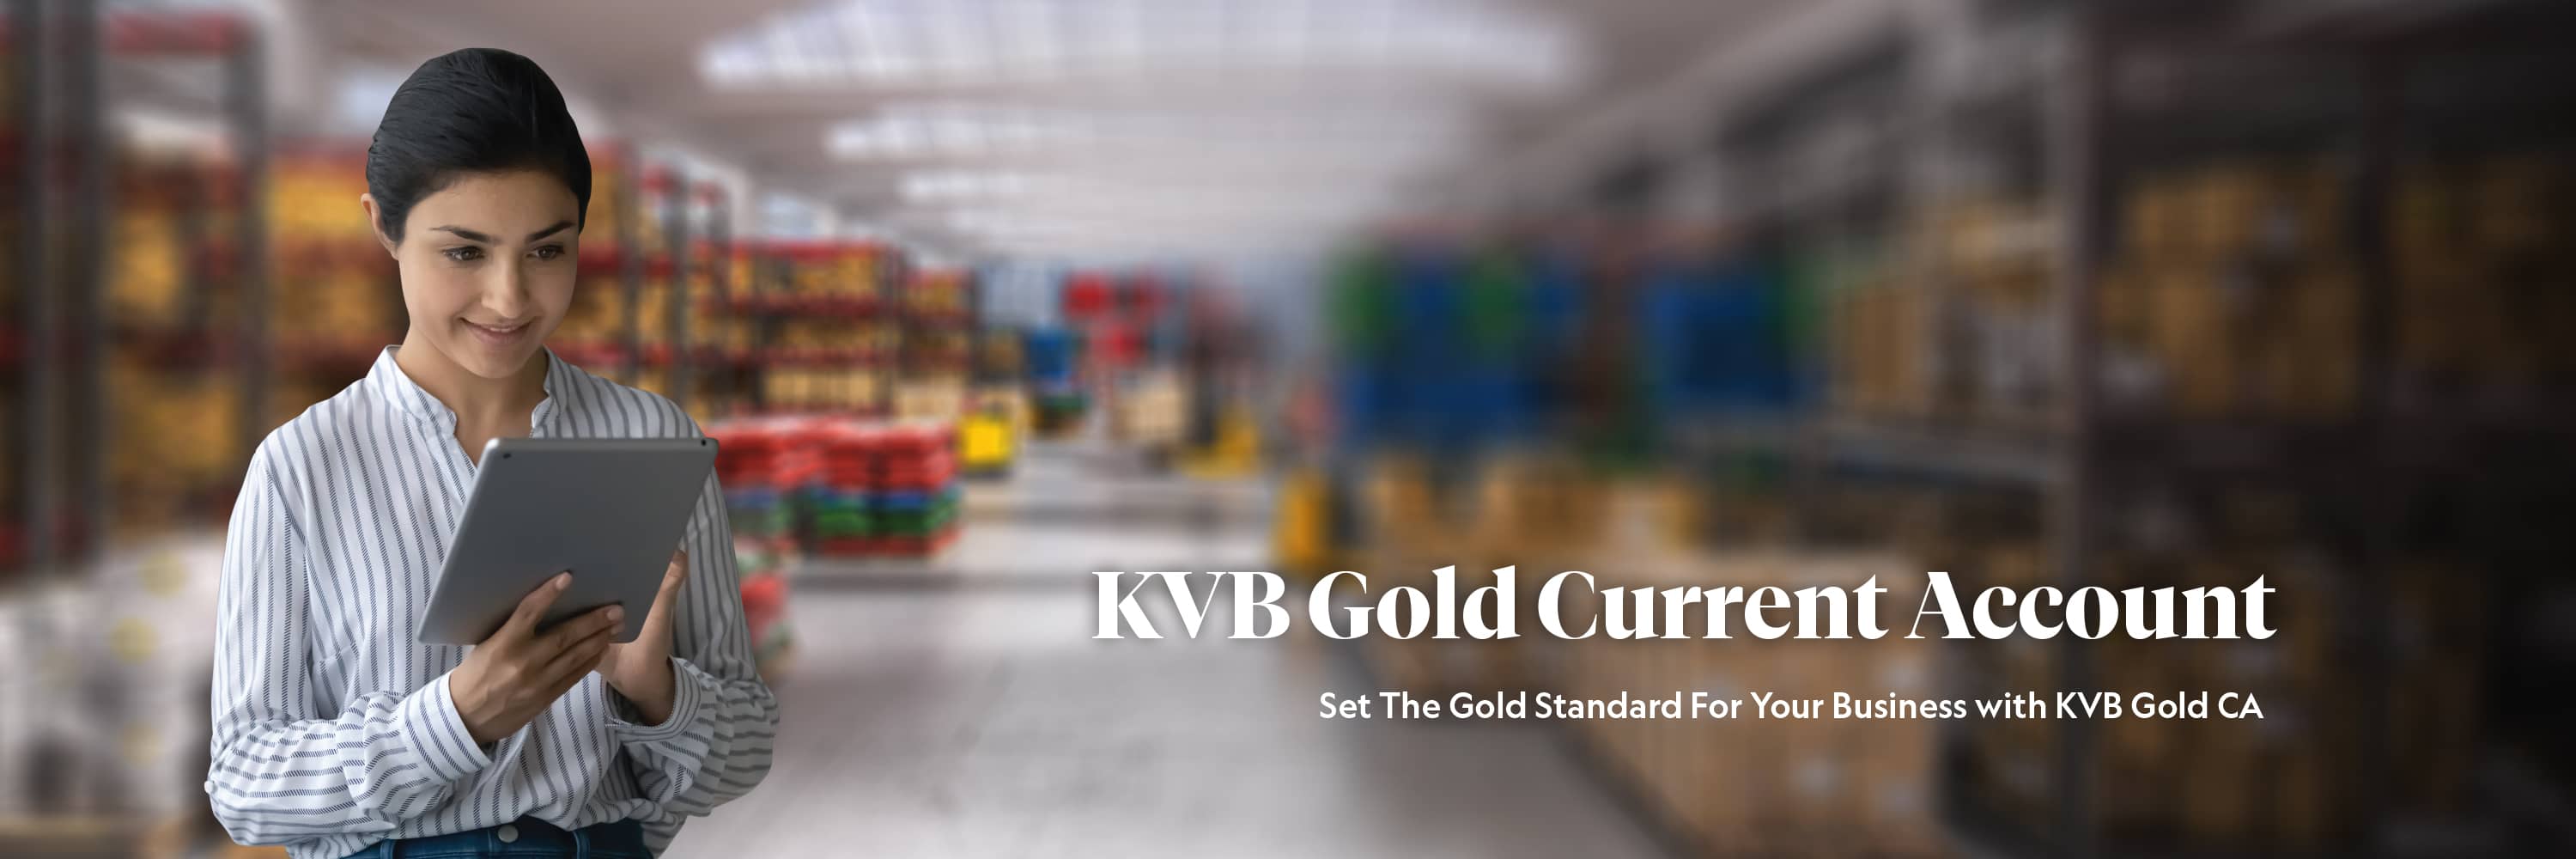 KVB Gold Current Account